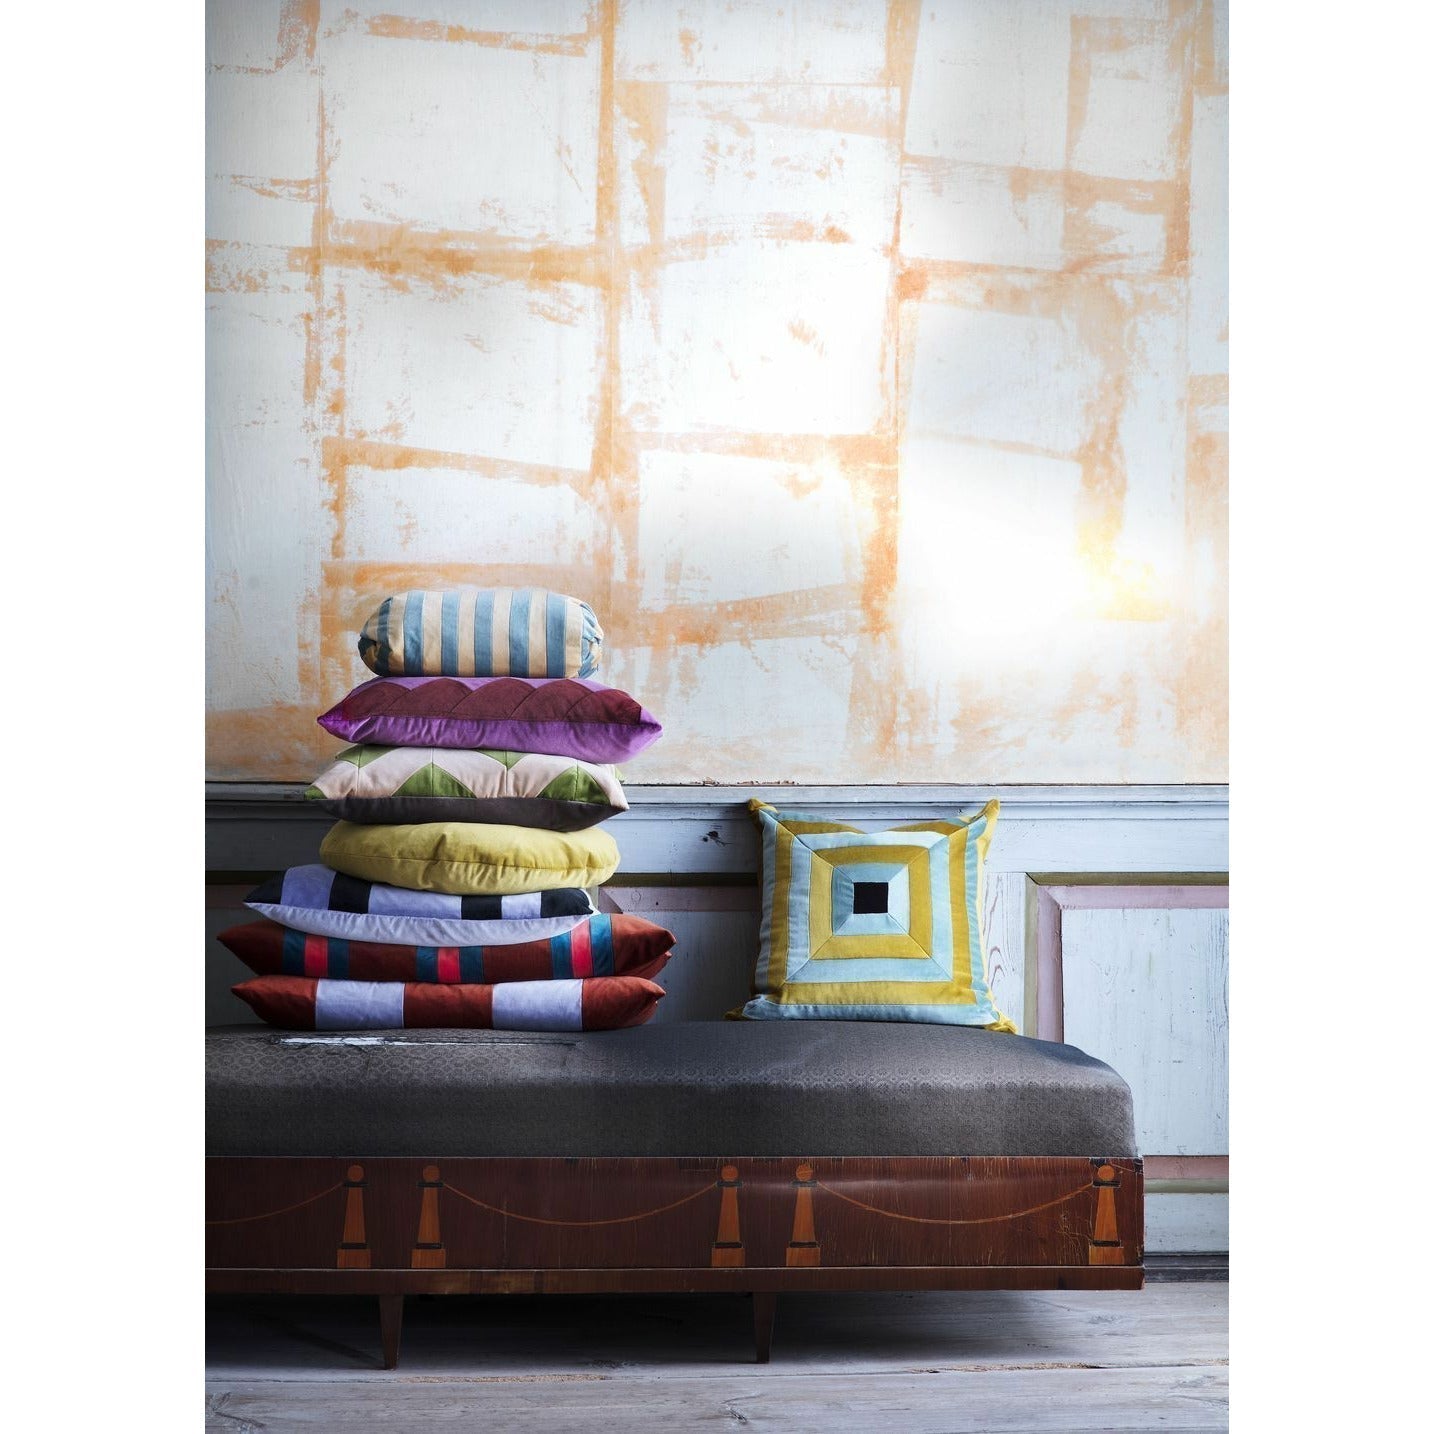 Christina Lundsteen Stripe Velvet Cushion 55 x55 cm, donkerrood/blush